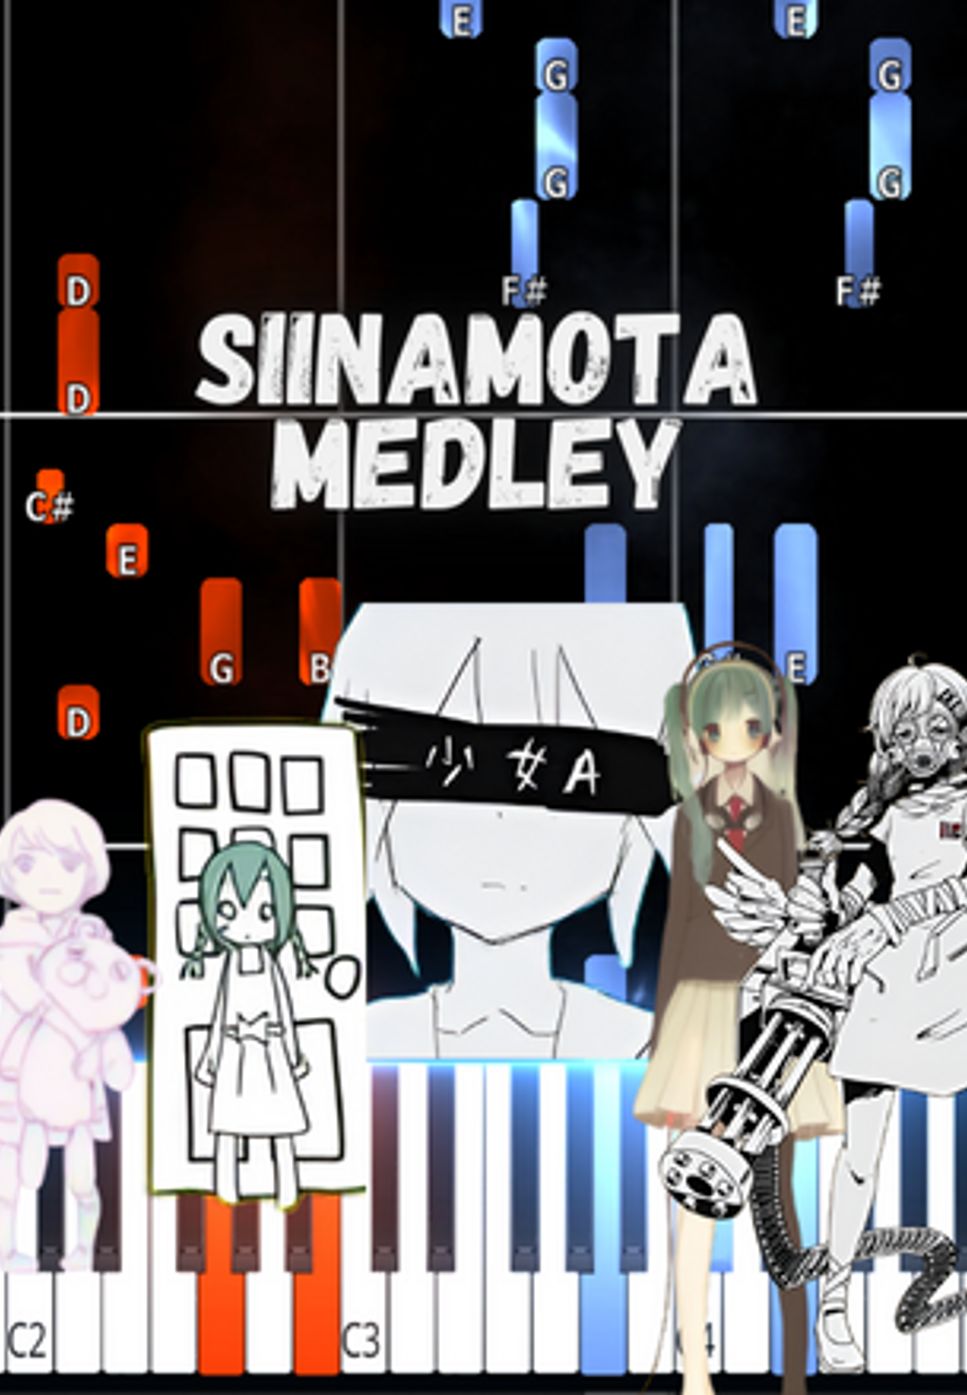 Siinamota - Siinamota Medley by Marco D.